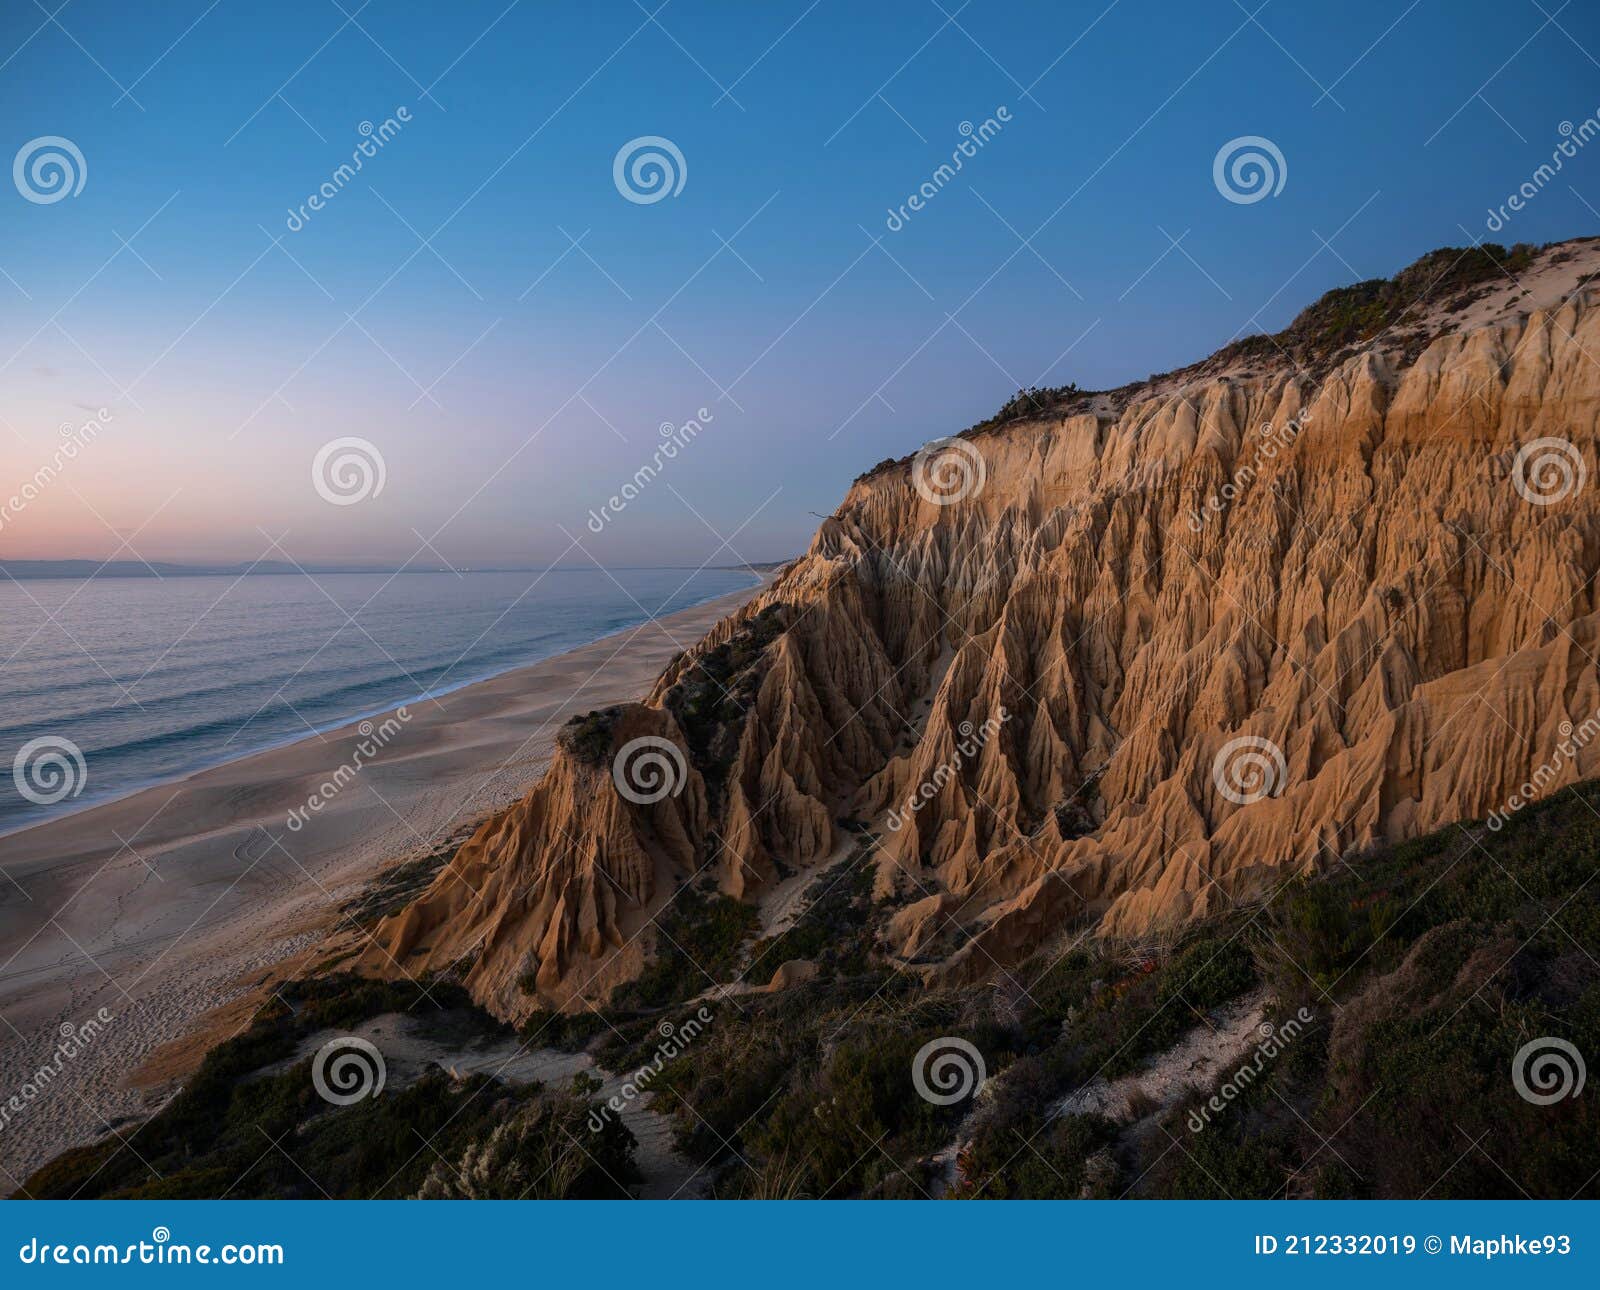 sunset panorama of arriba fossil da praia da gale fontainhas hoodoo fairy chimney earth pyramid rock formation portugal